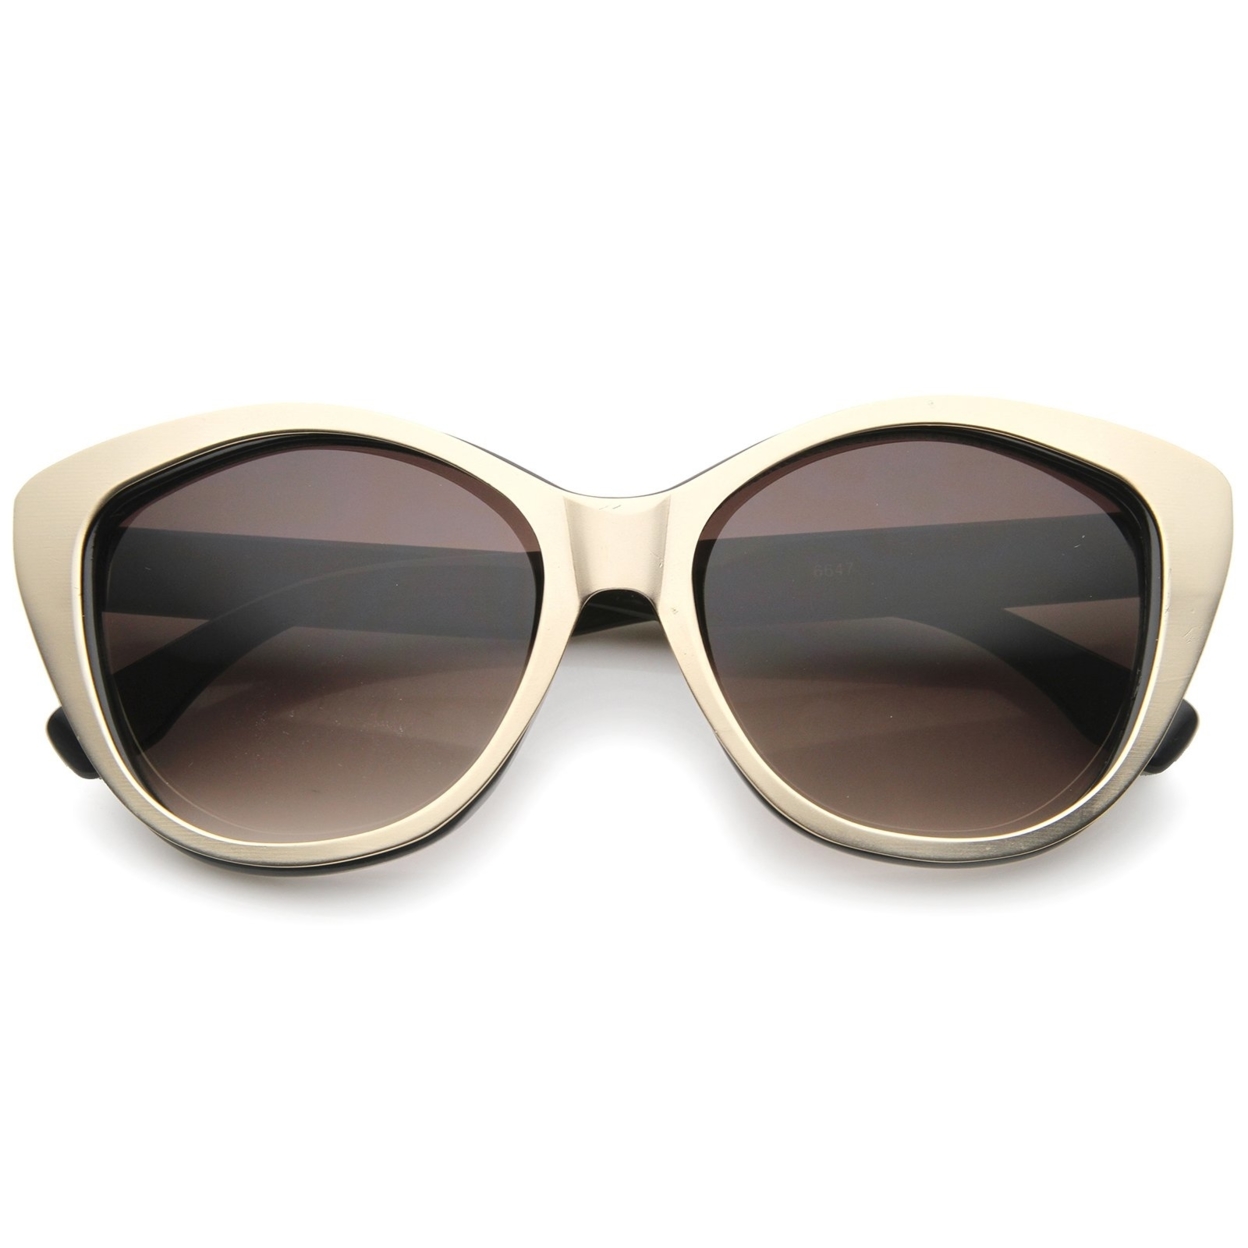 Women's High Fashion Two-Toned Tinted Lens Oversize Cat Eye Sunglasses 55mm - Black-Gunmetal / Smoke